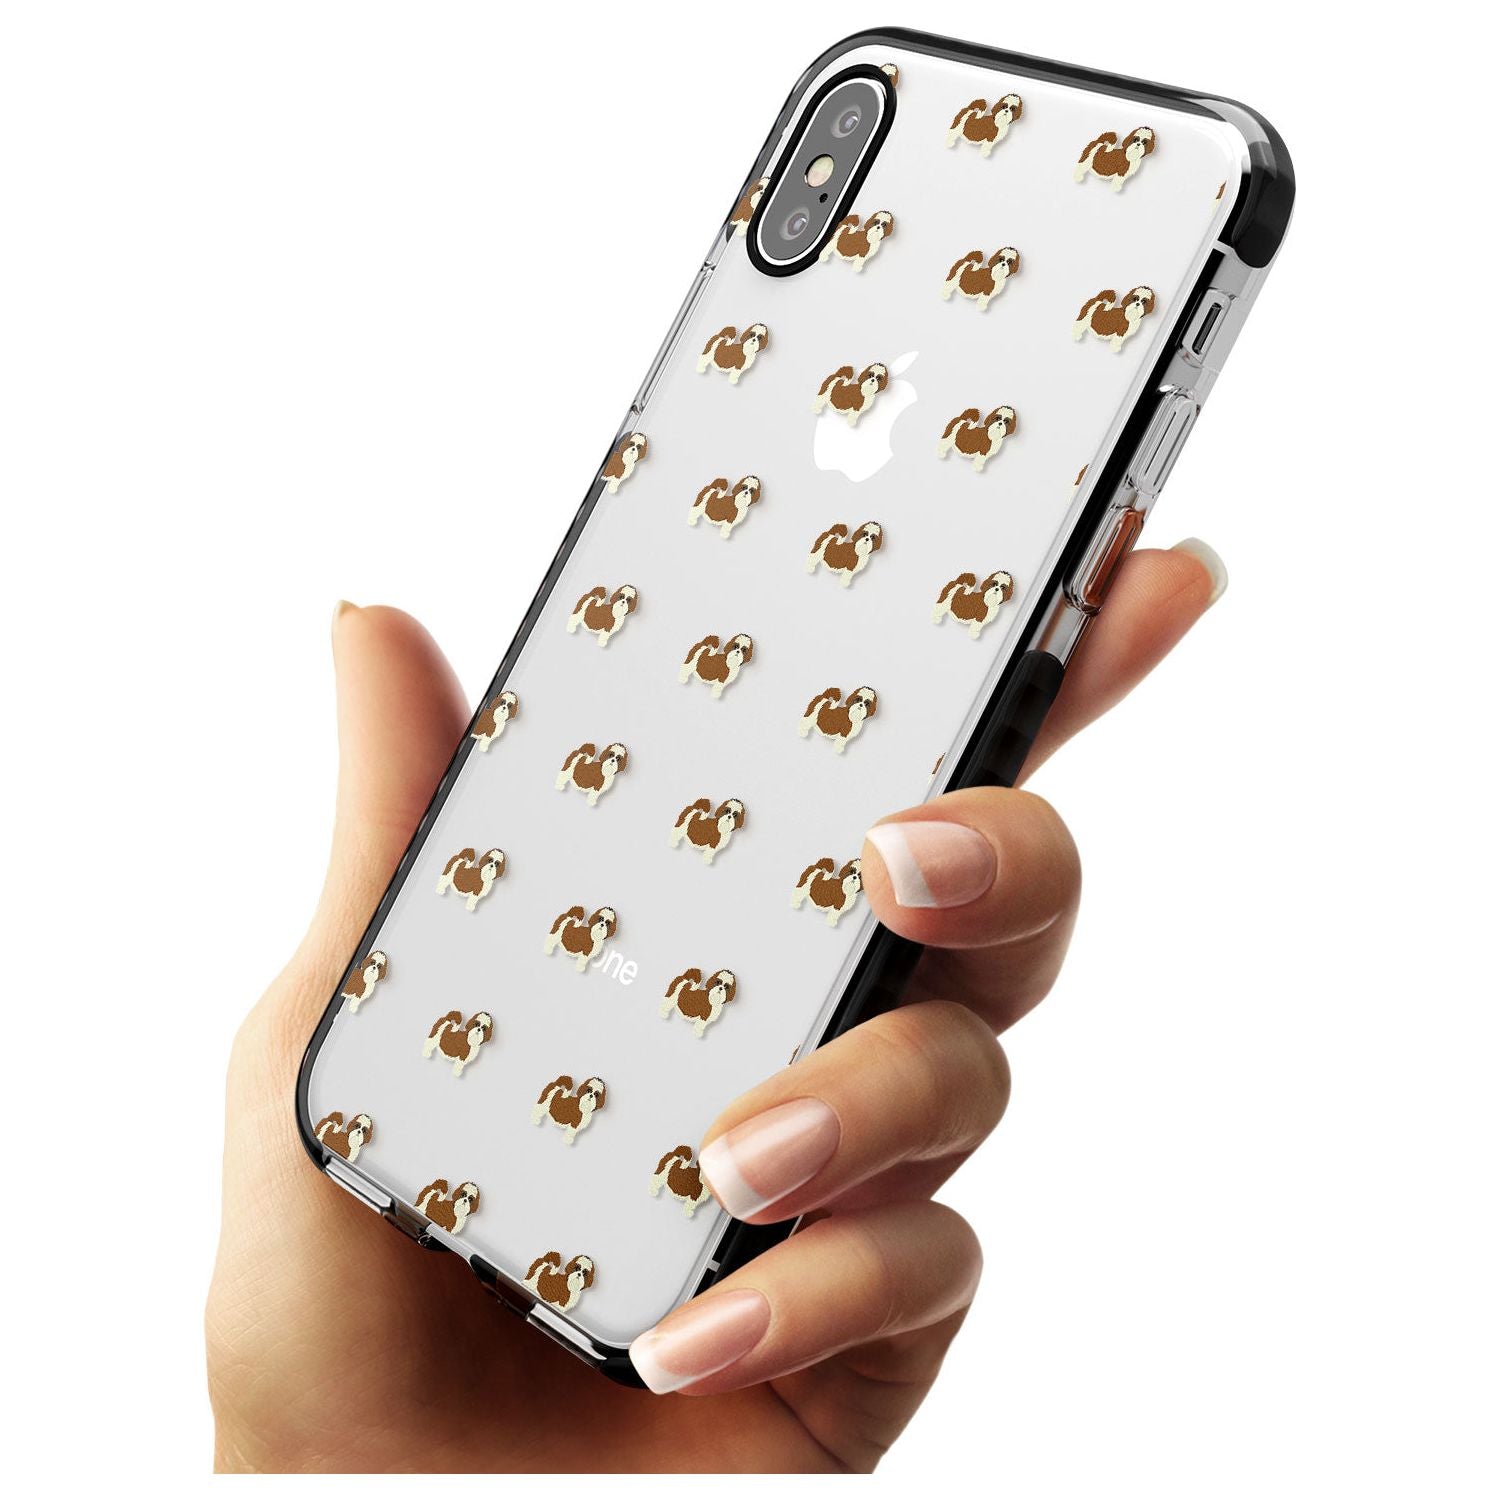 Shih Tzu Dog Pattern Clear Black Impact Phone Case for iPhone X XS Max XR